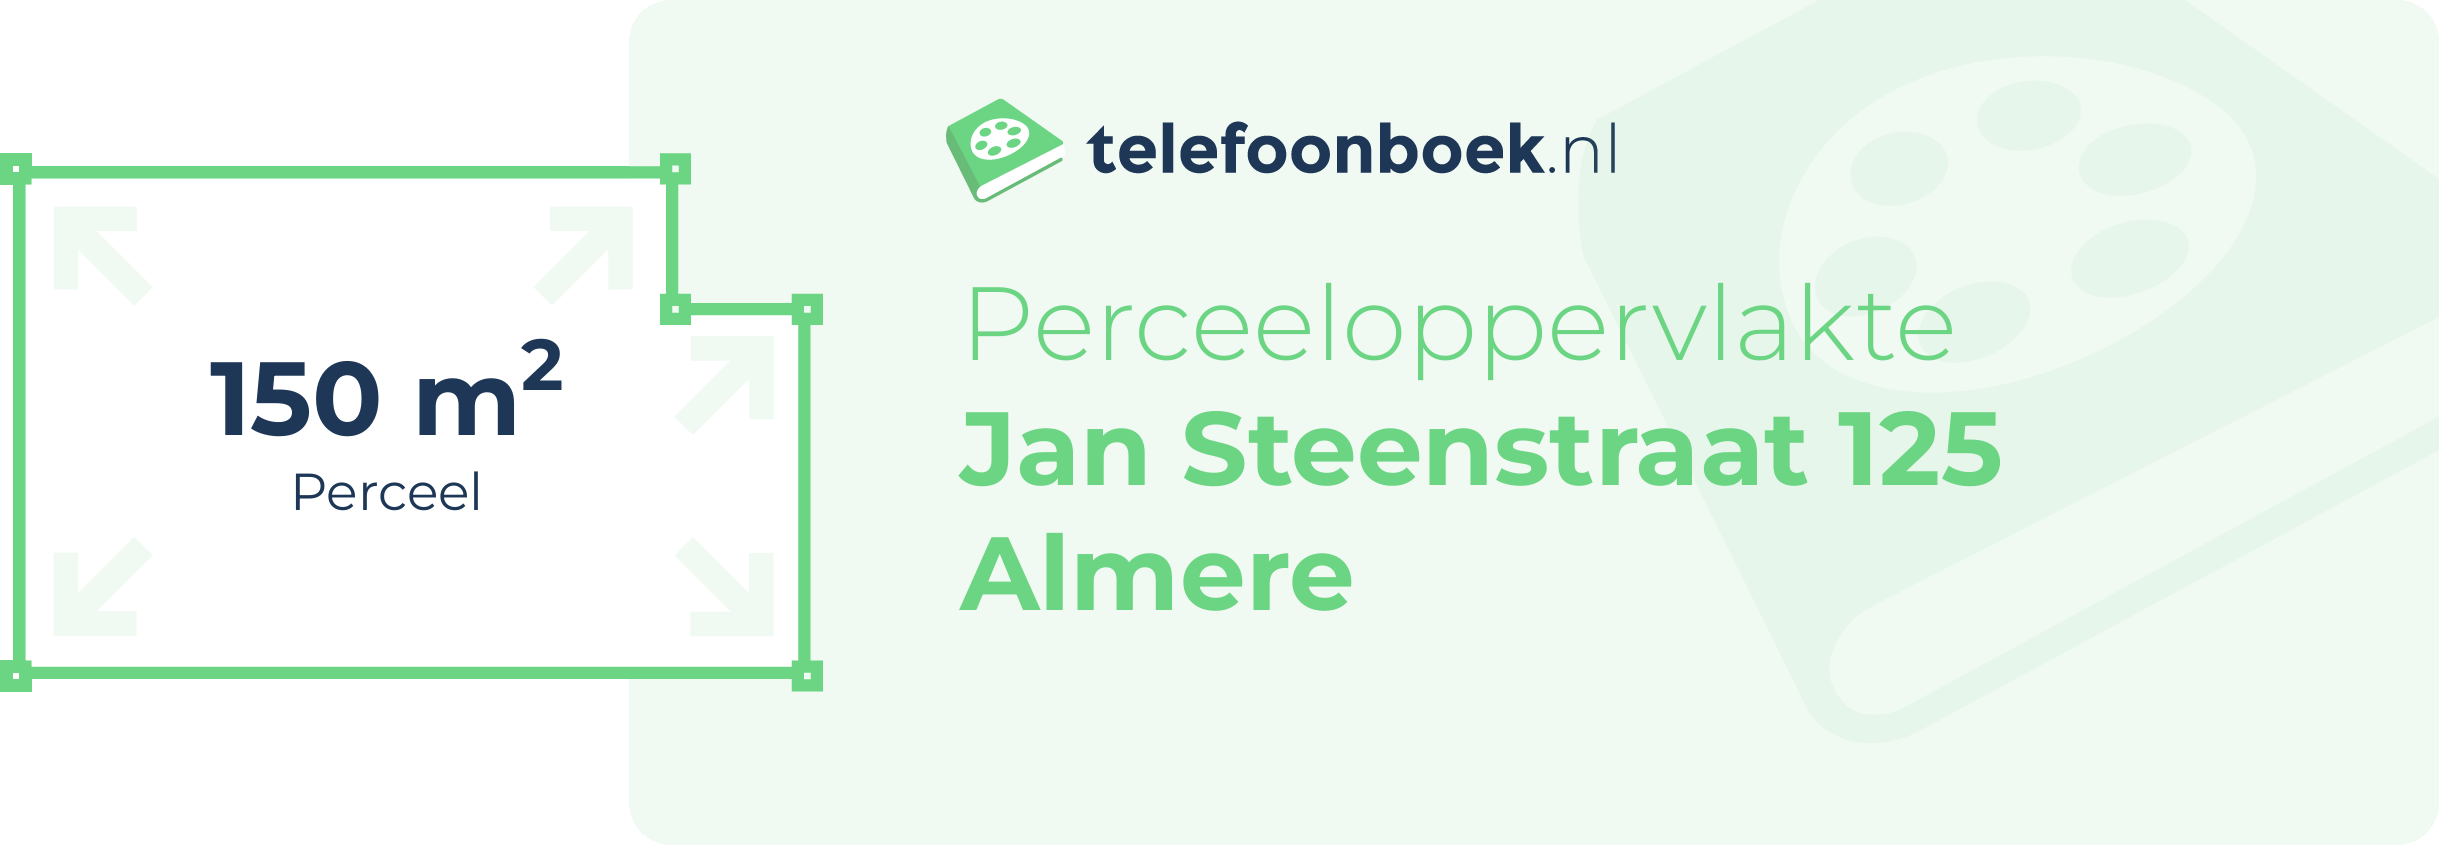 Perceeloppervlakte Jan Steenstraat 125 Almere